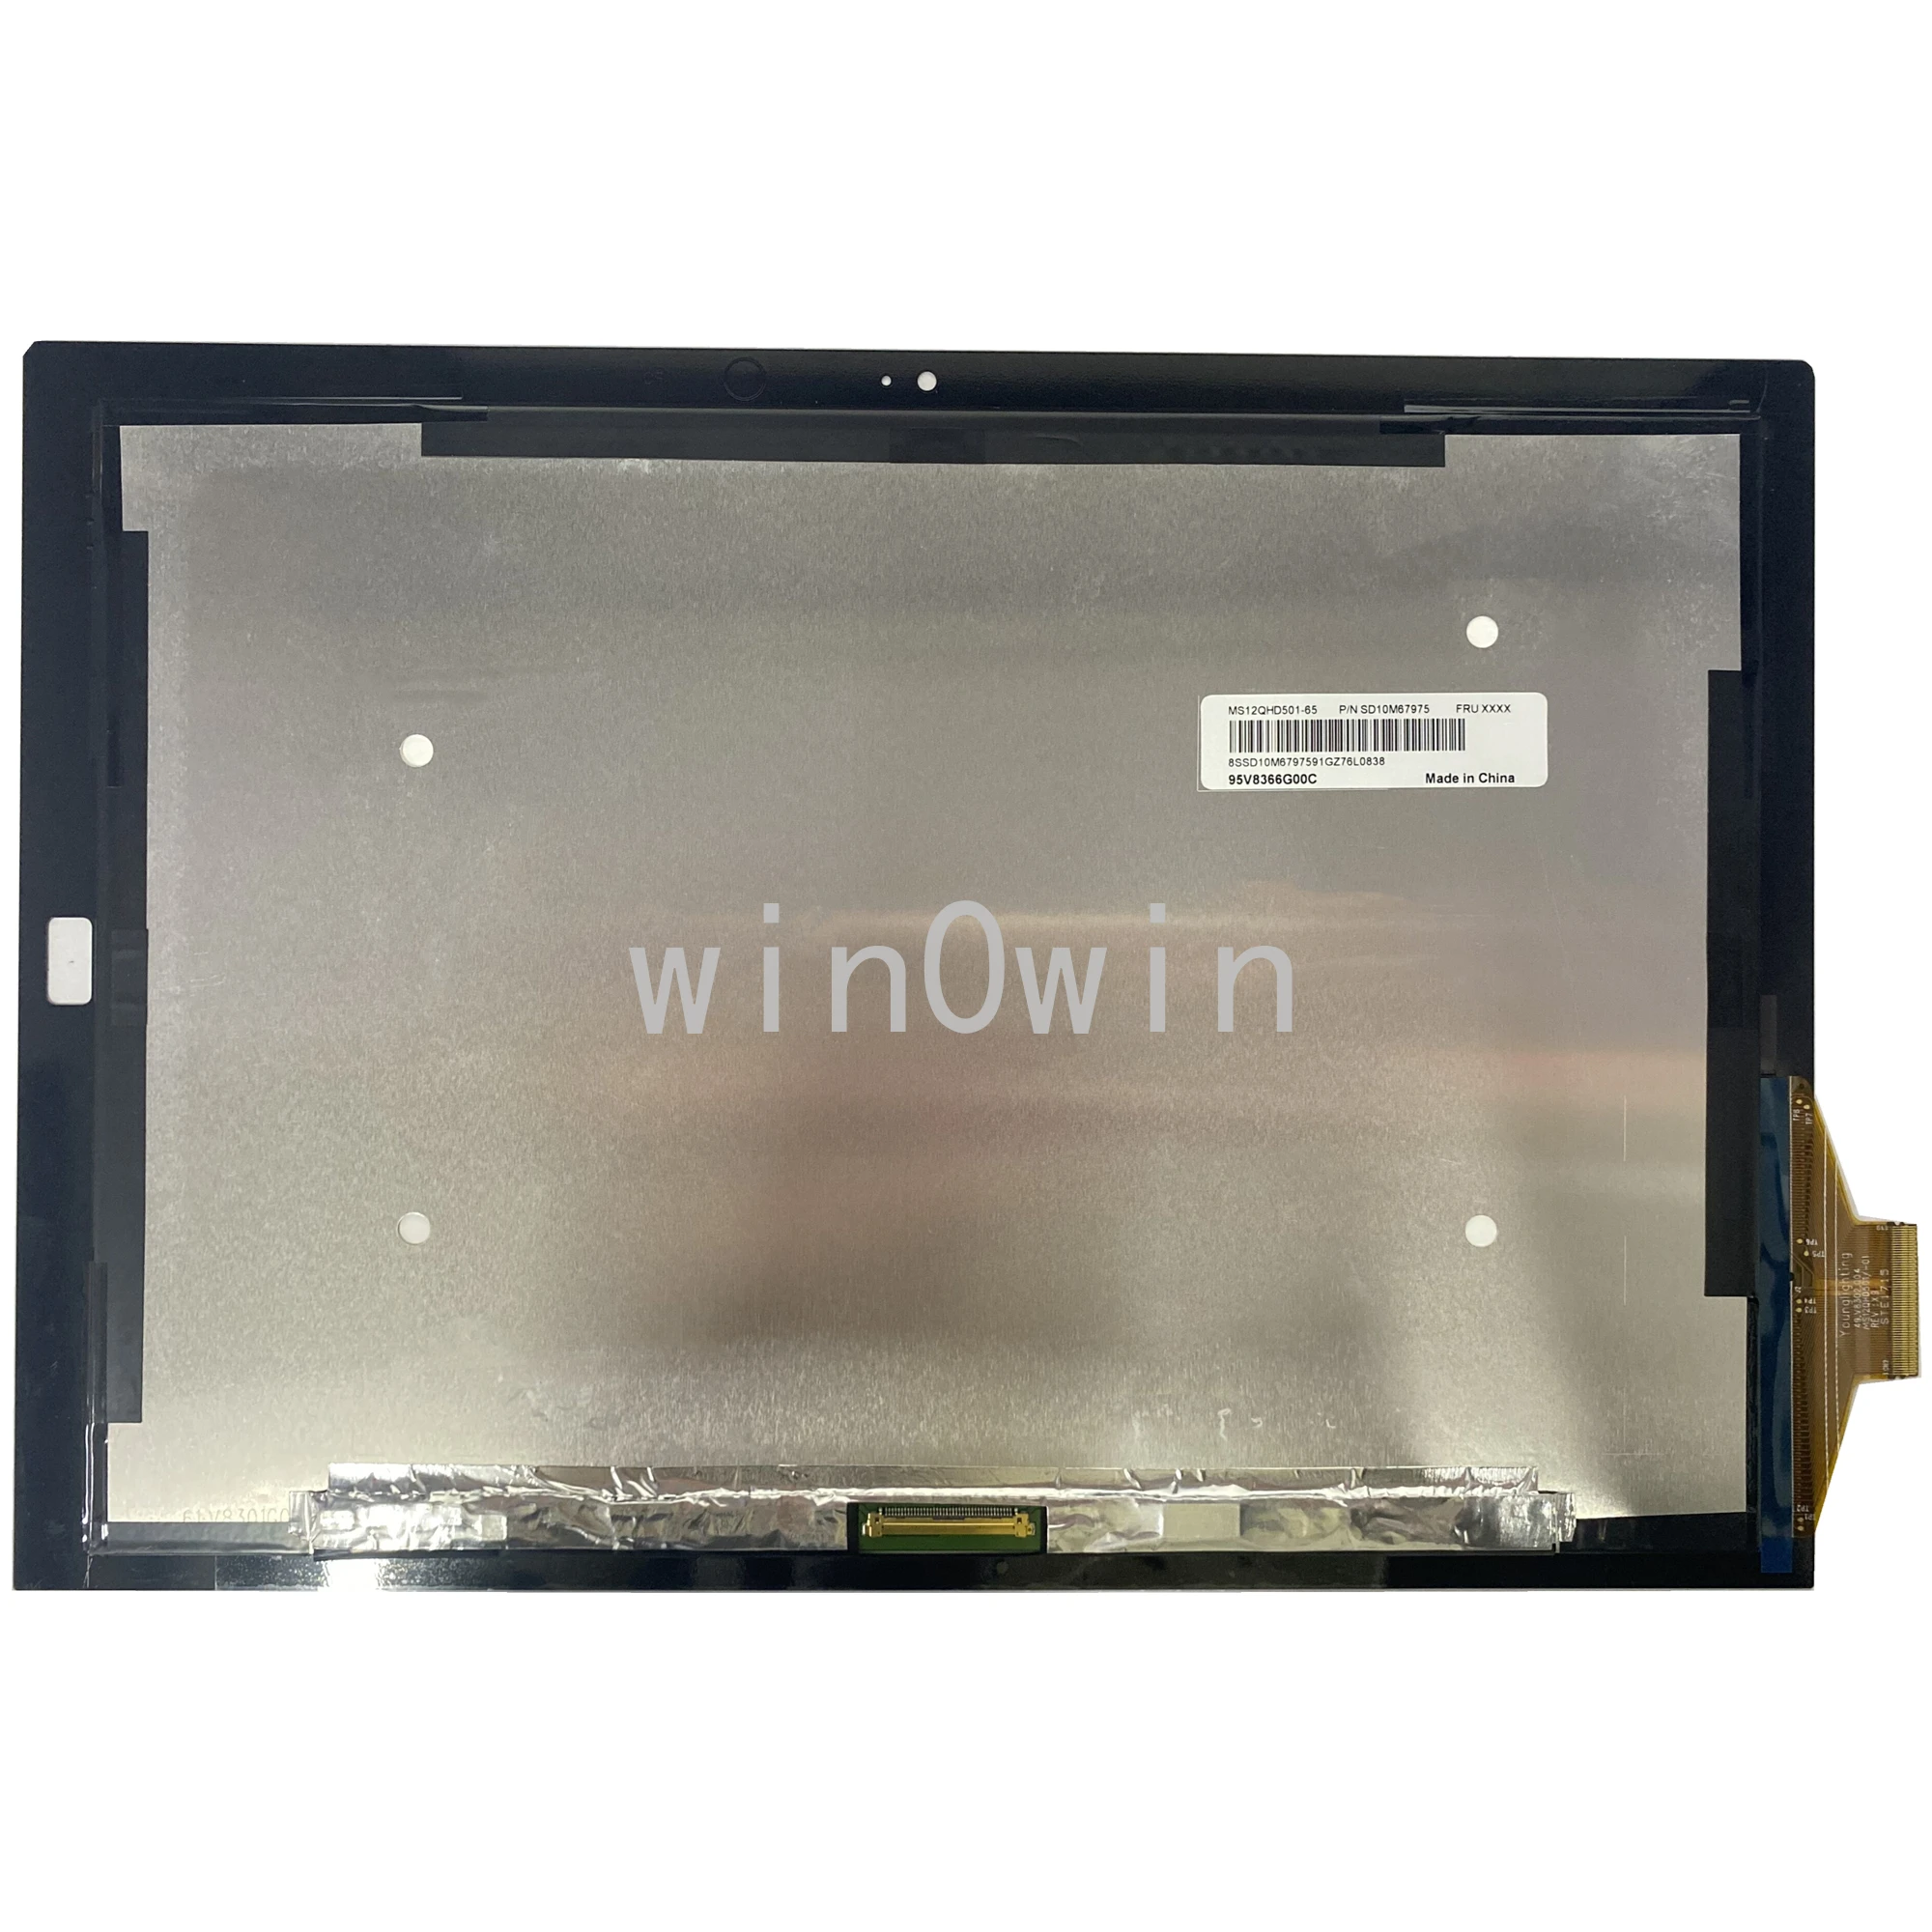  Lenovo ThinkPad X1 tablet 1st 2nd Gen M120NN42 R0 21 41 MS12QHD501-65 -       